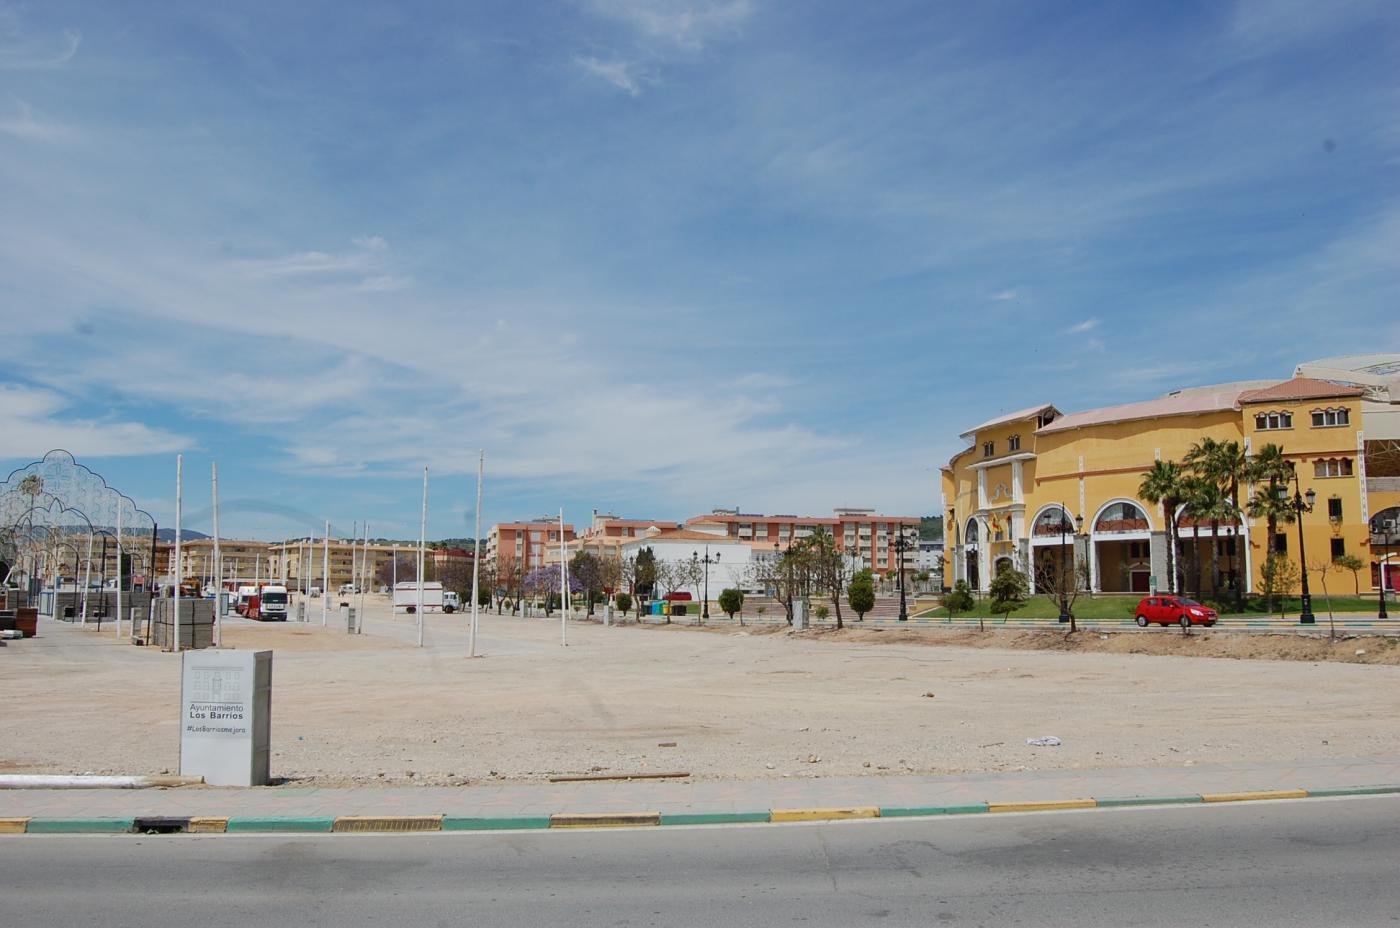 Los Barrios proyecto contar con un autocine este verano · Campo de Gibraltar · Andalucía Información